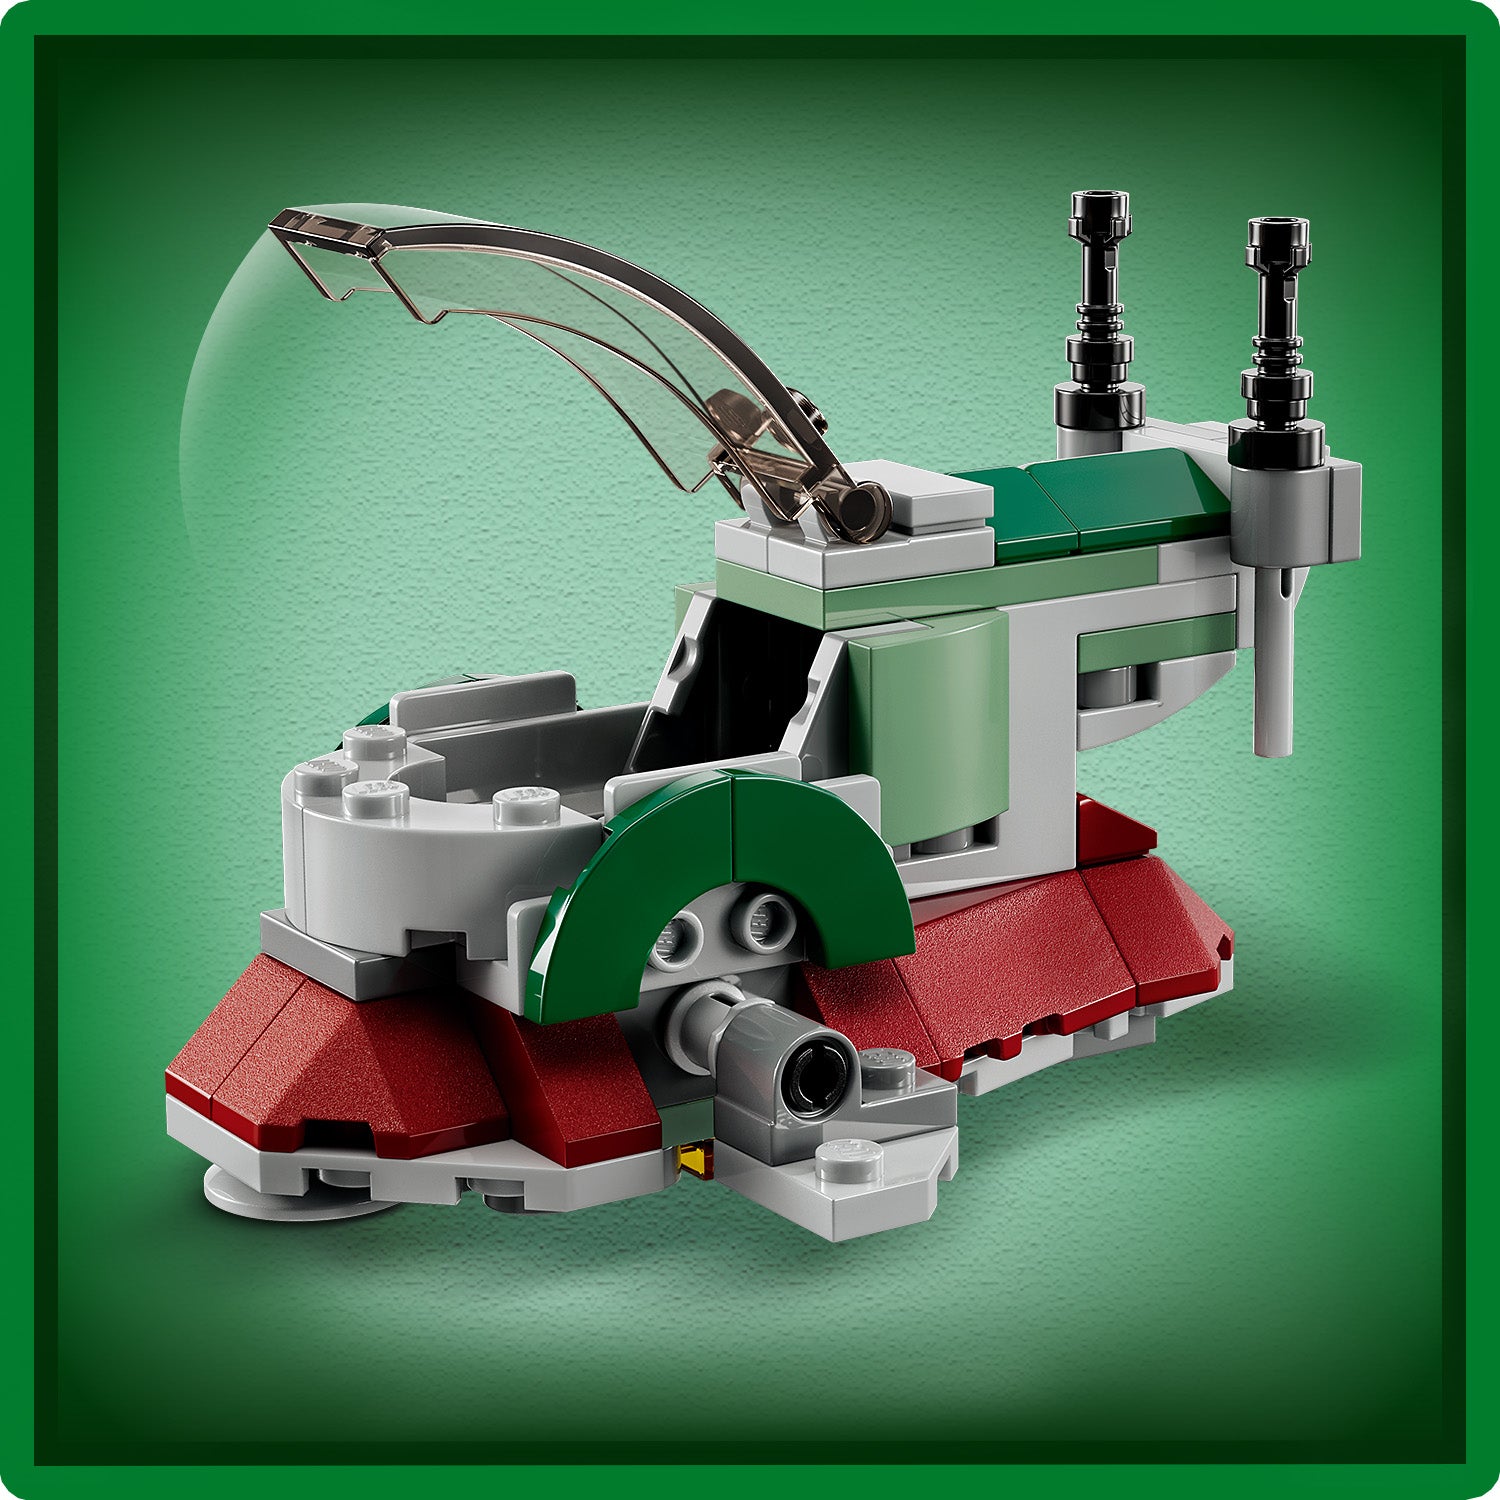 Lego 75344 Boba Fetts Starship Micro Fighter